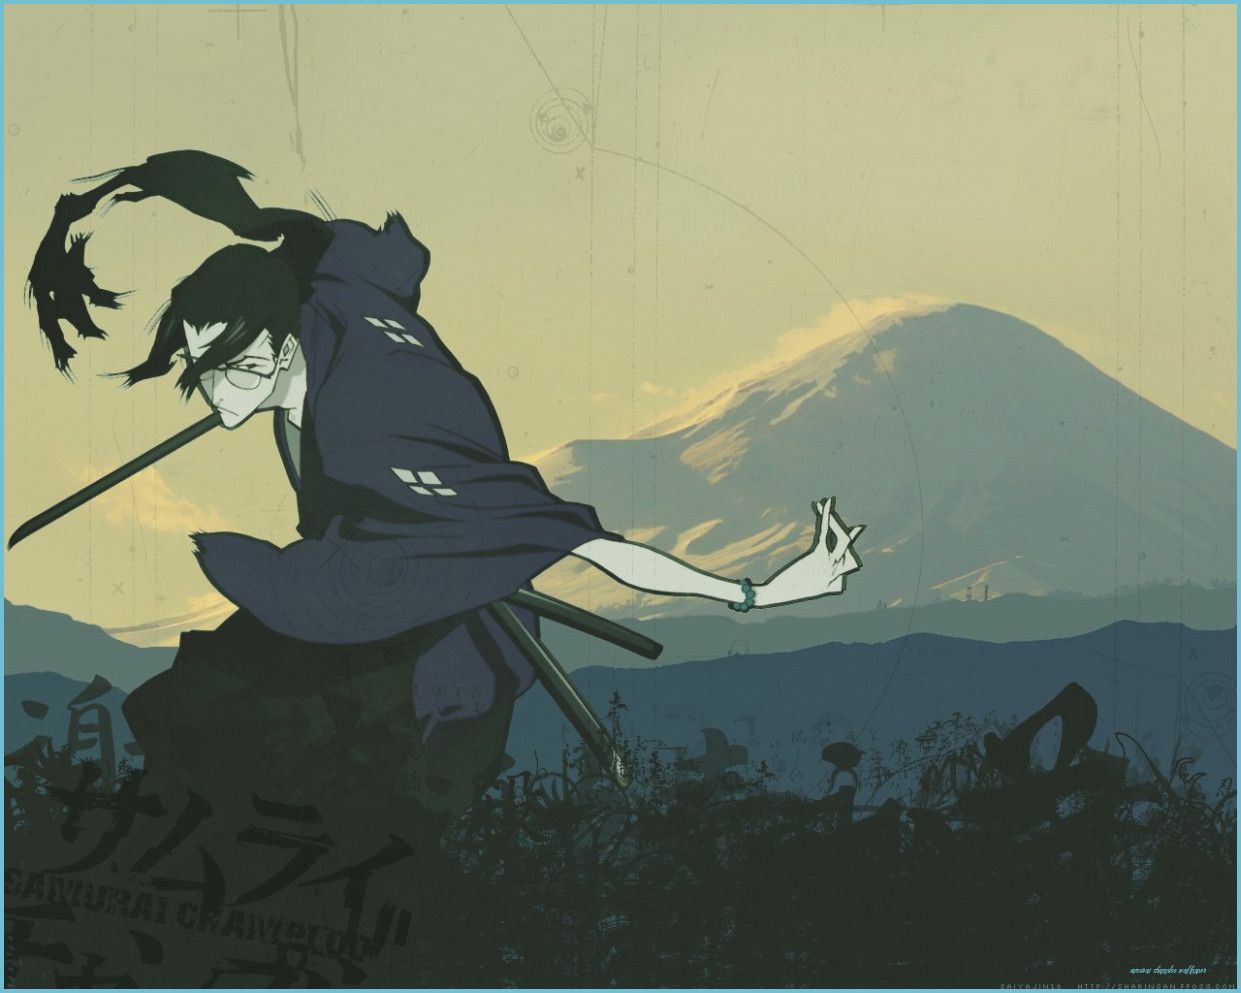 Samurai Champloo HD Wallpaper Background Image champloo wallpaper